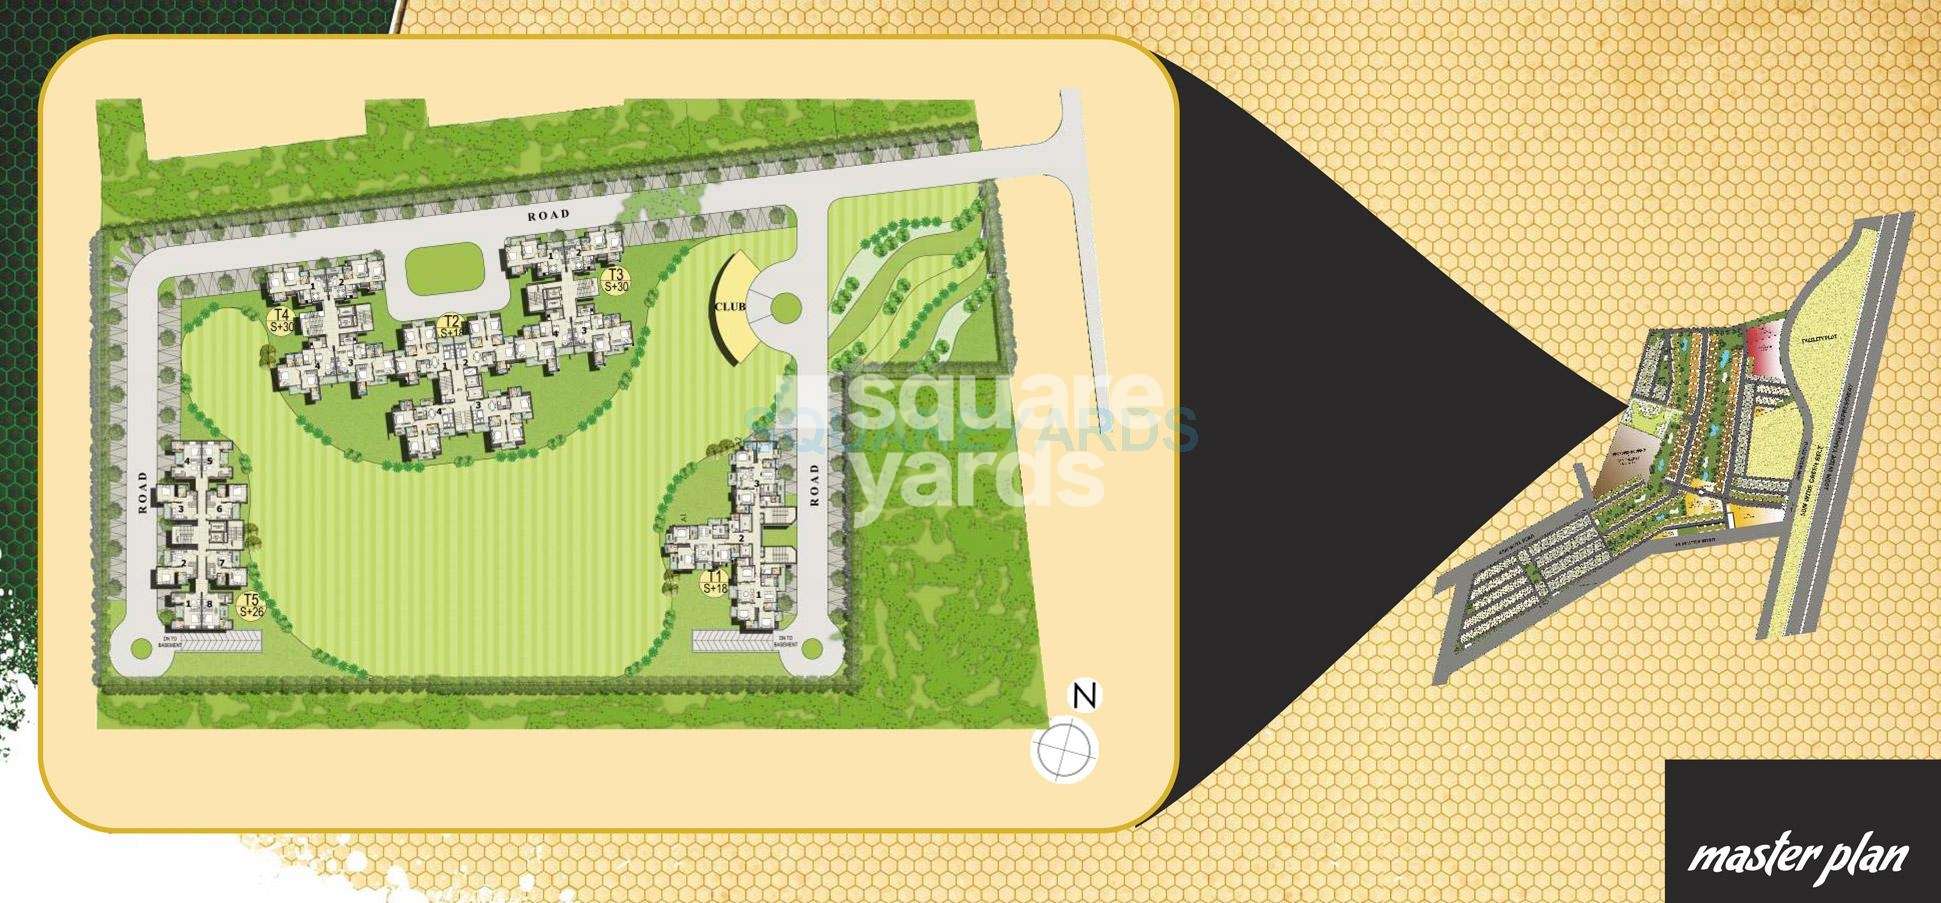 orris golf homes green bay master plan image1